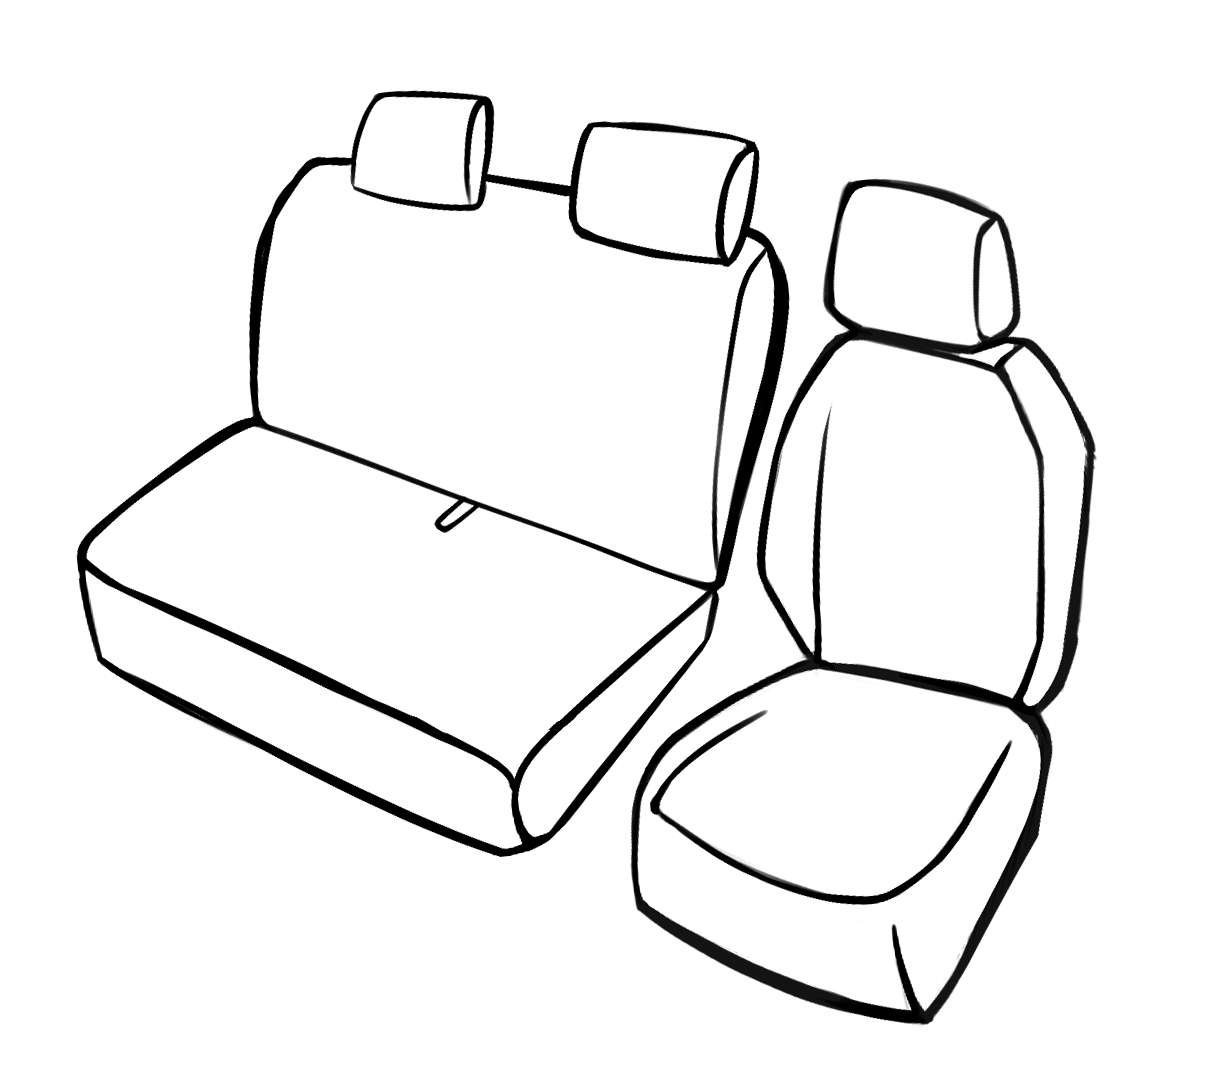 Transporter Coprisedili in similpelle per Renault Trafic II, Opel Vivaro, Nissan Primastar, sedile singolo e doppio